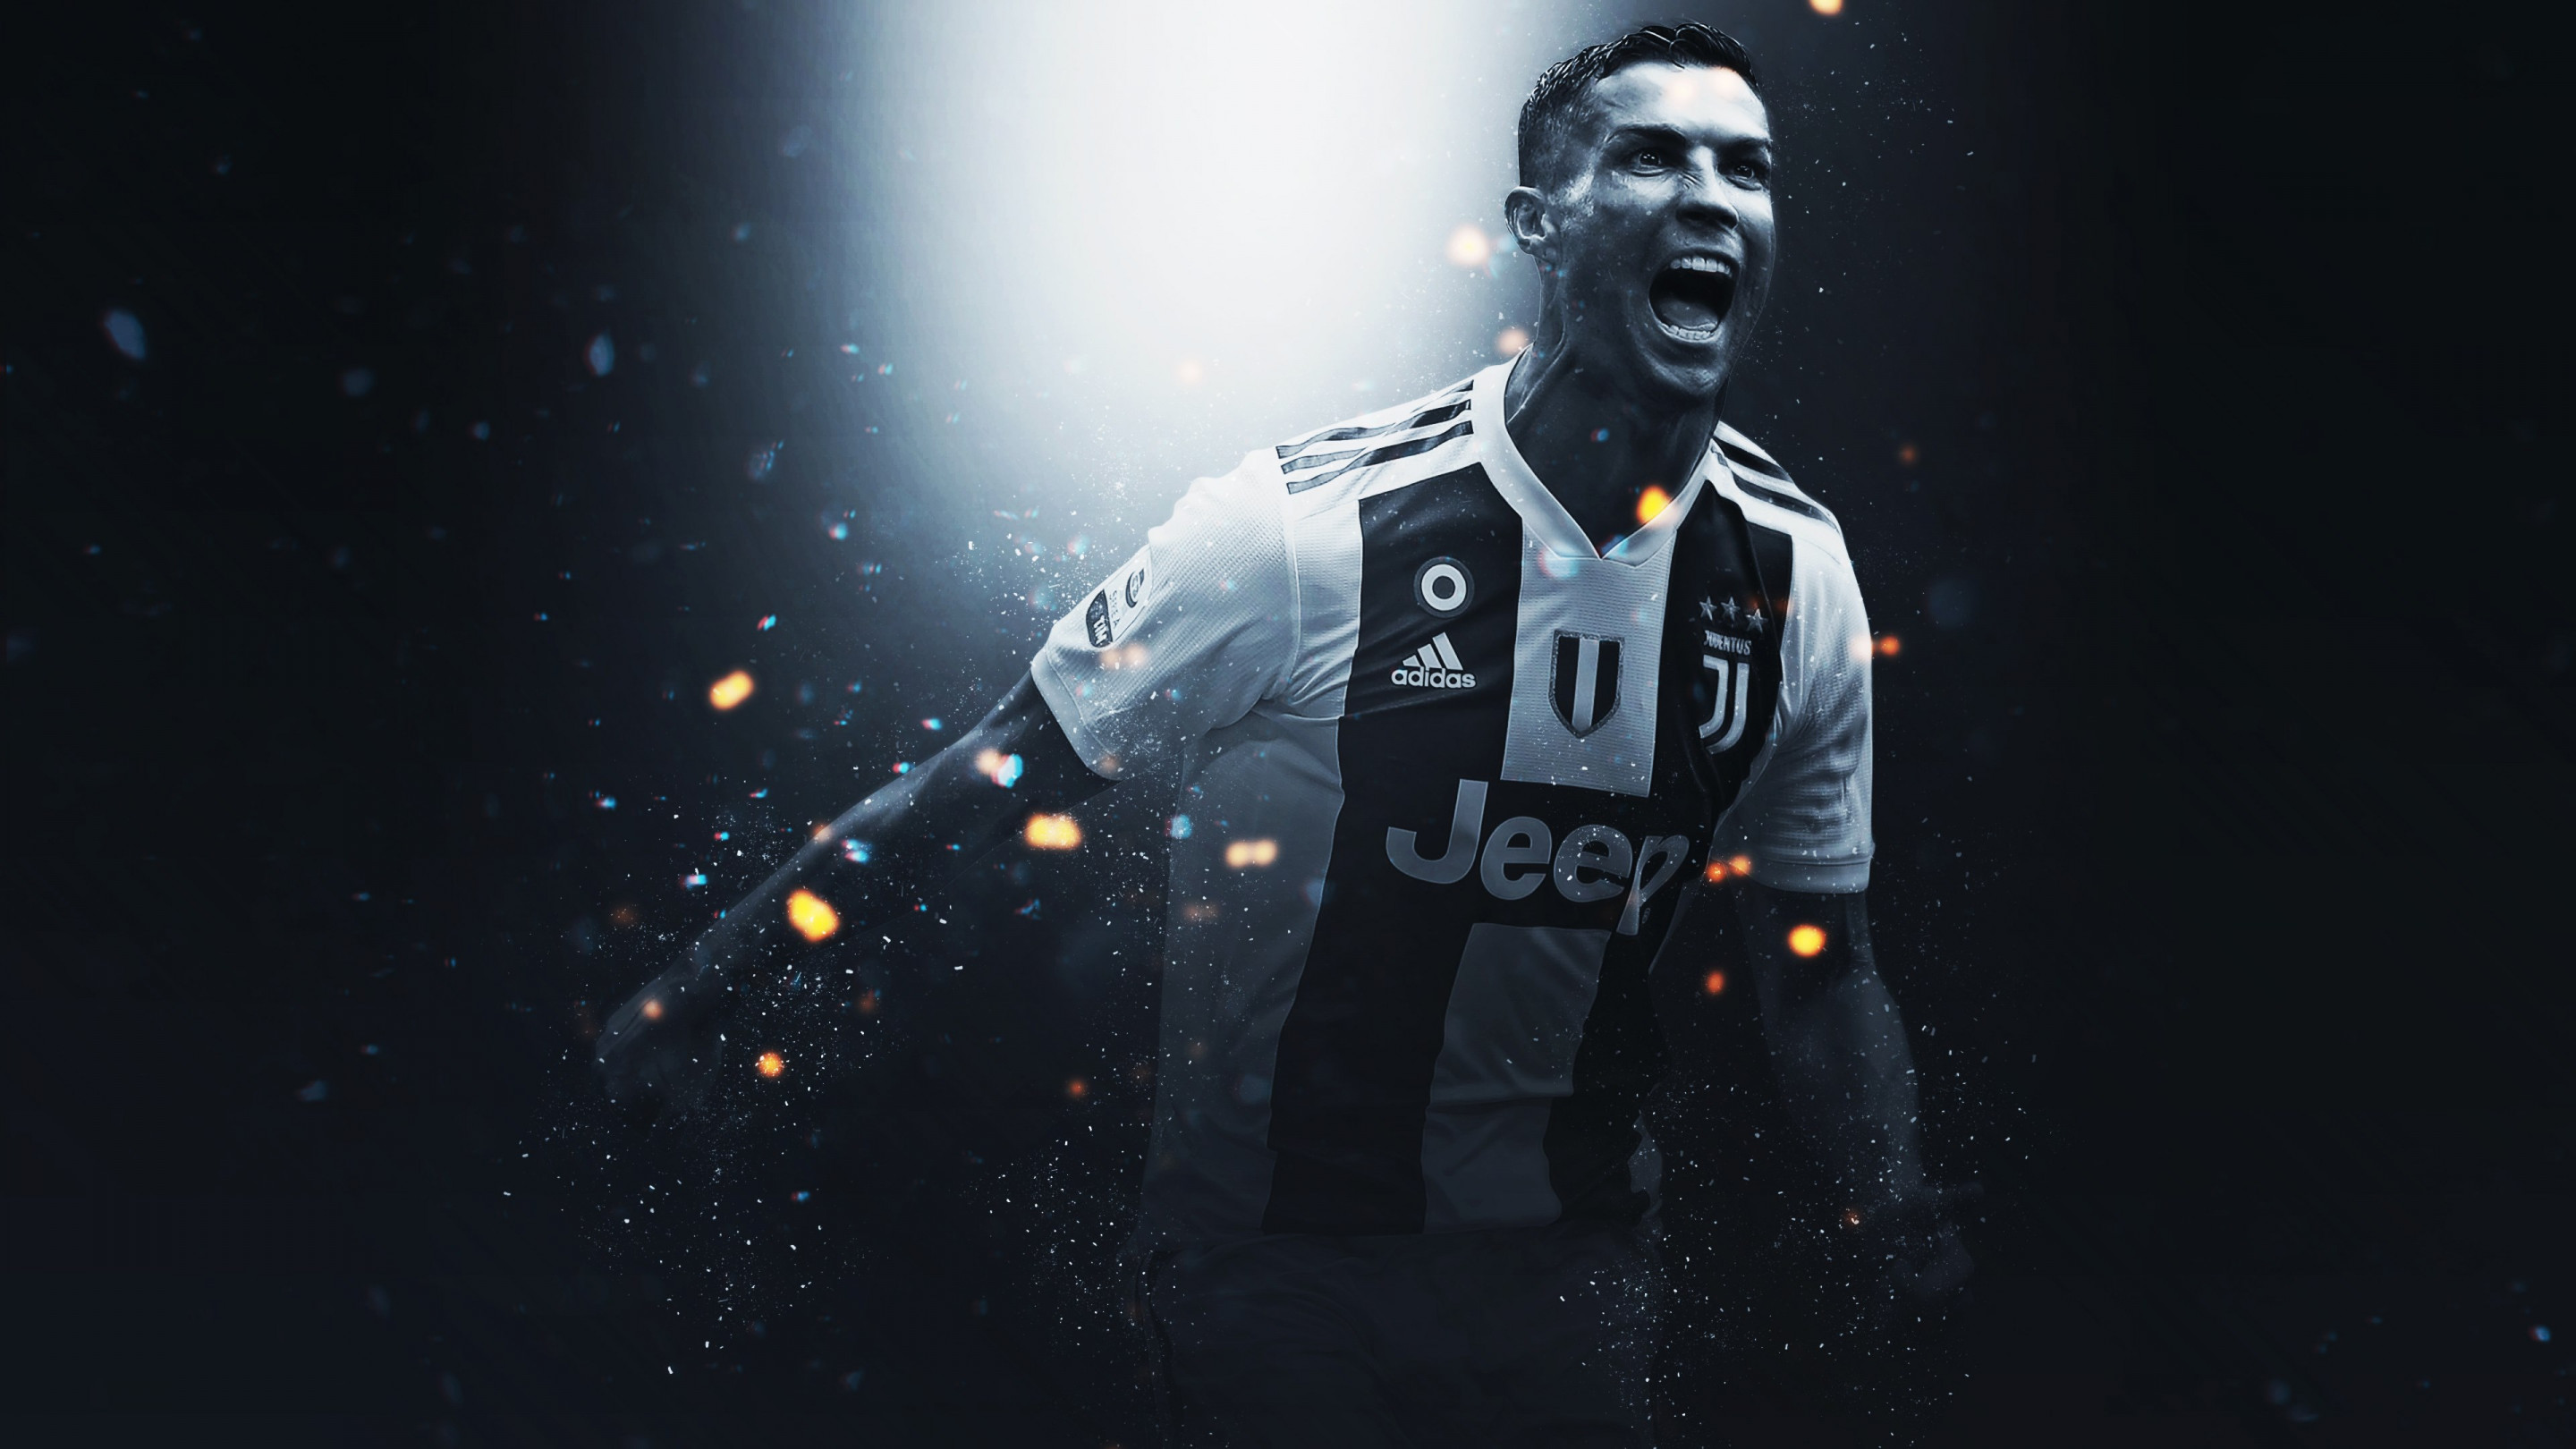 Cristiano Ronaldo at Juventus wallpaper 2880x1620